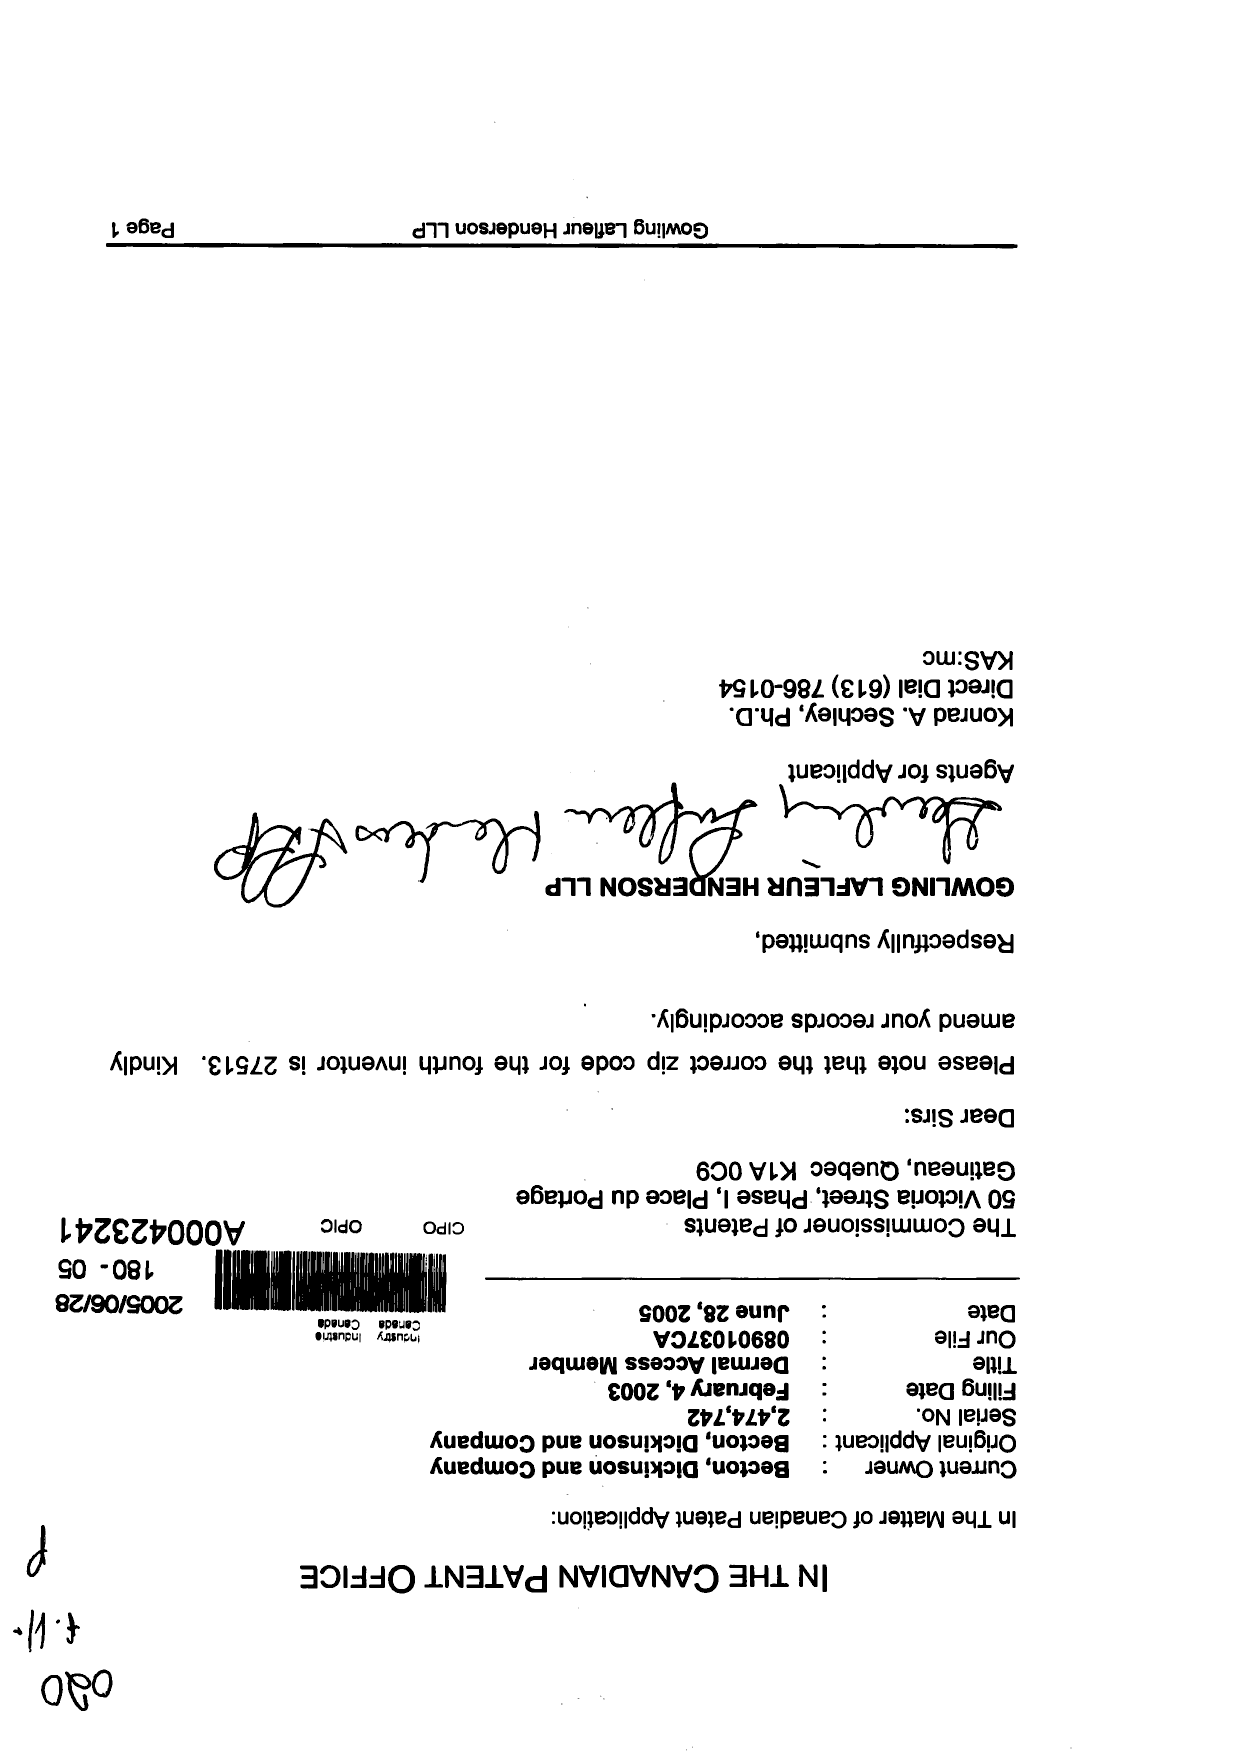 Canadian Patent Document 2474742. Correspondence 20041228. Image 1 of 1